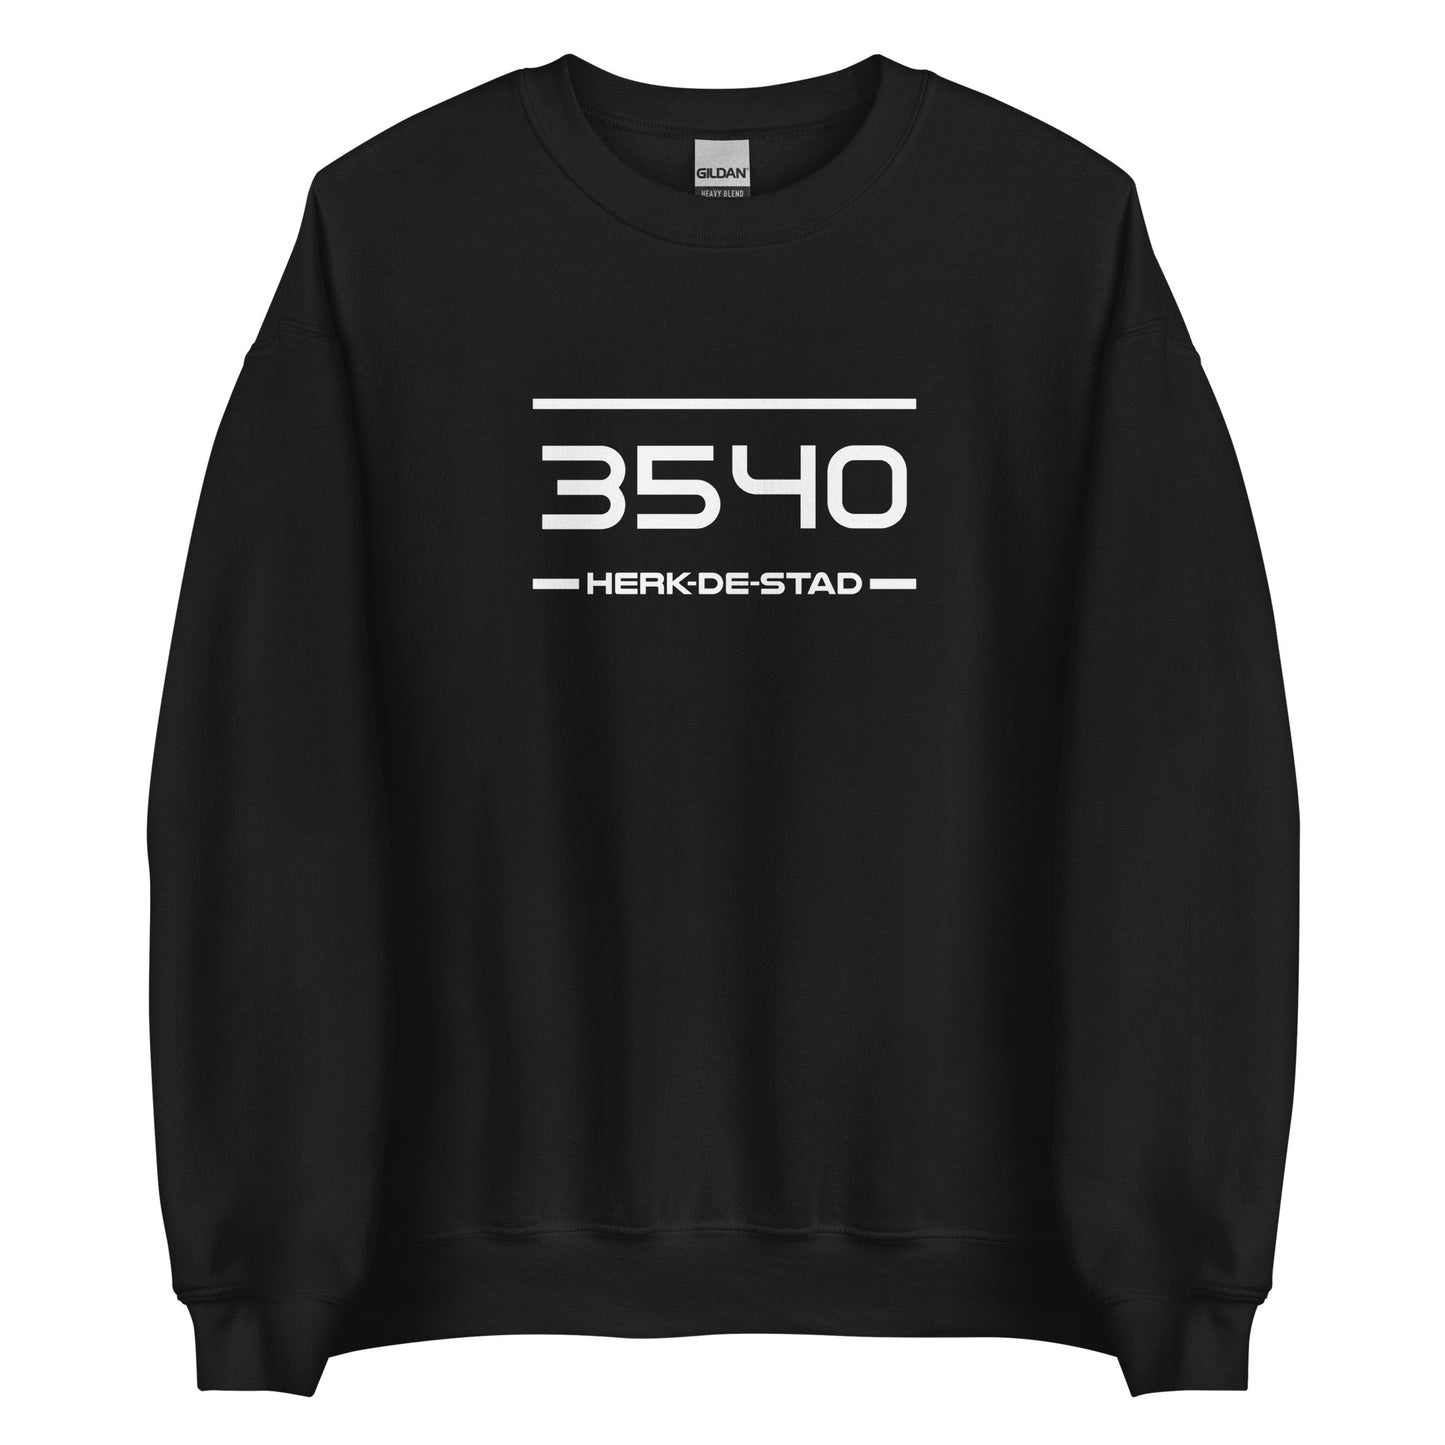 Sweater - 3540 - Herk-De-Stad (M/V)